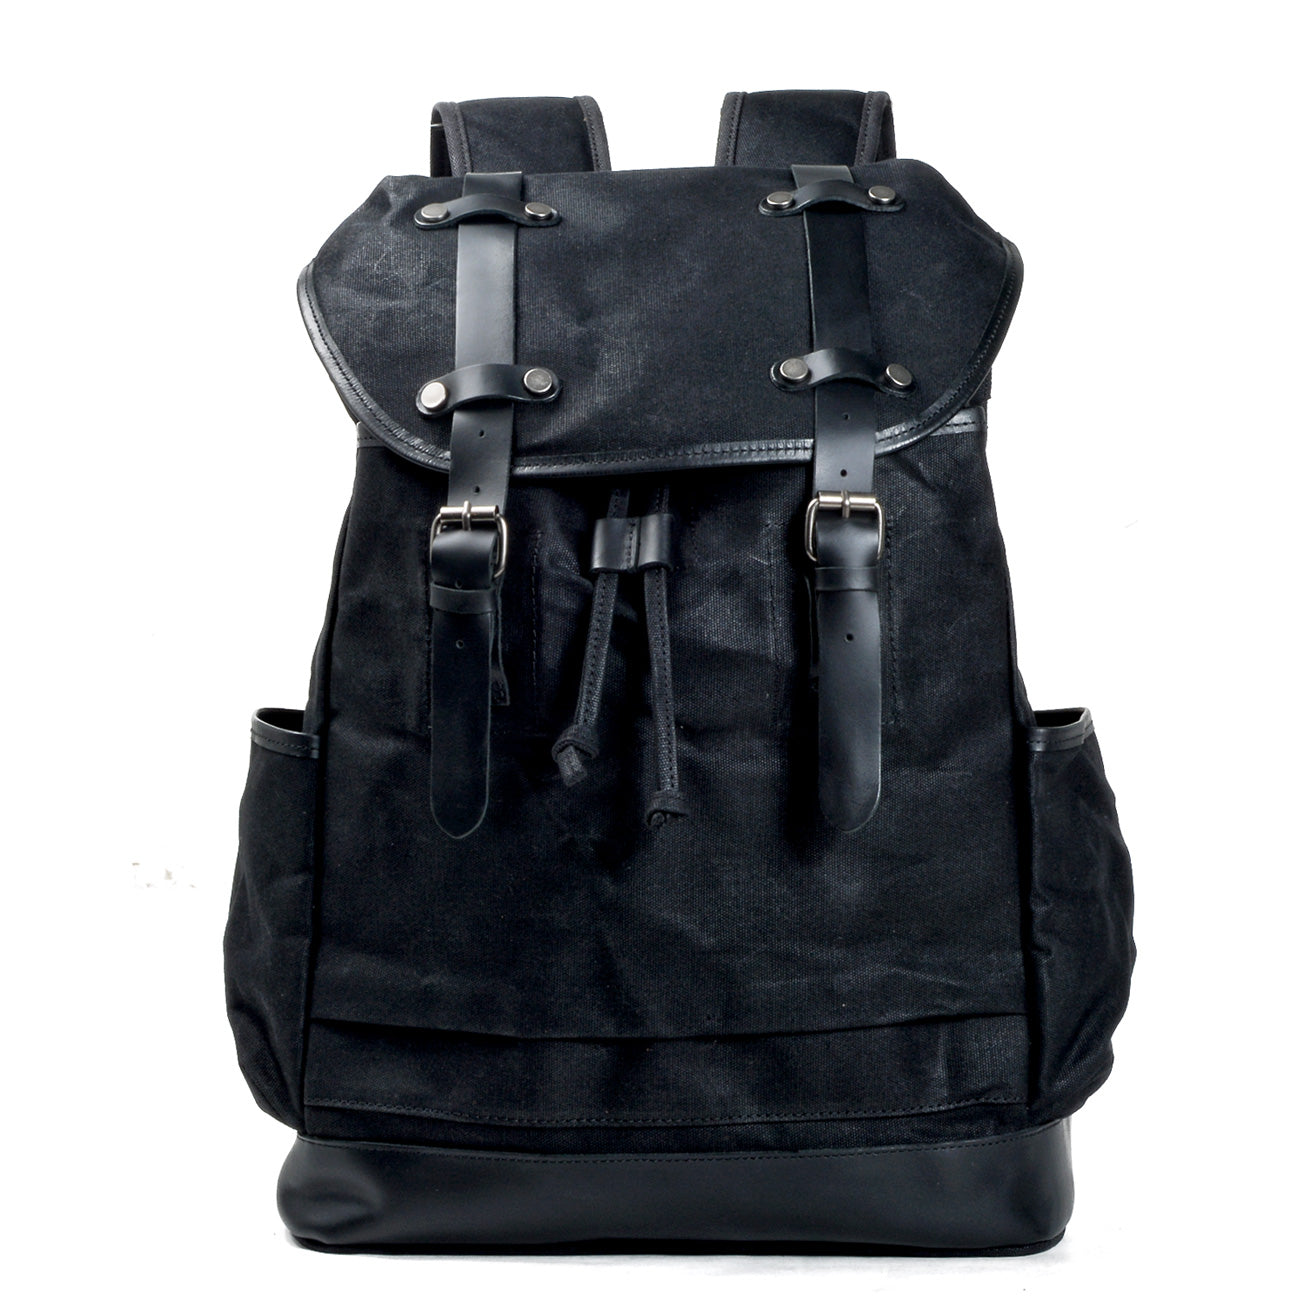 Casual Black Canvas Backpack with Adjustable Shoulder Straps for